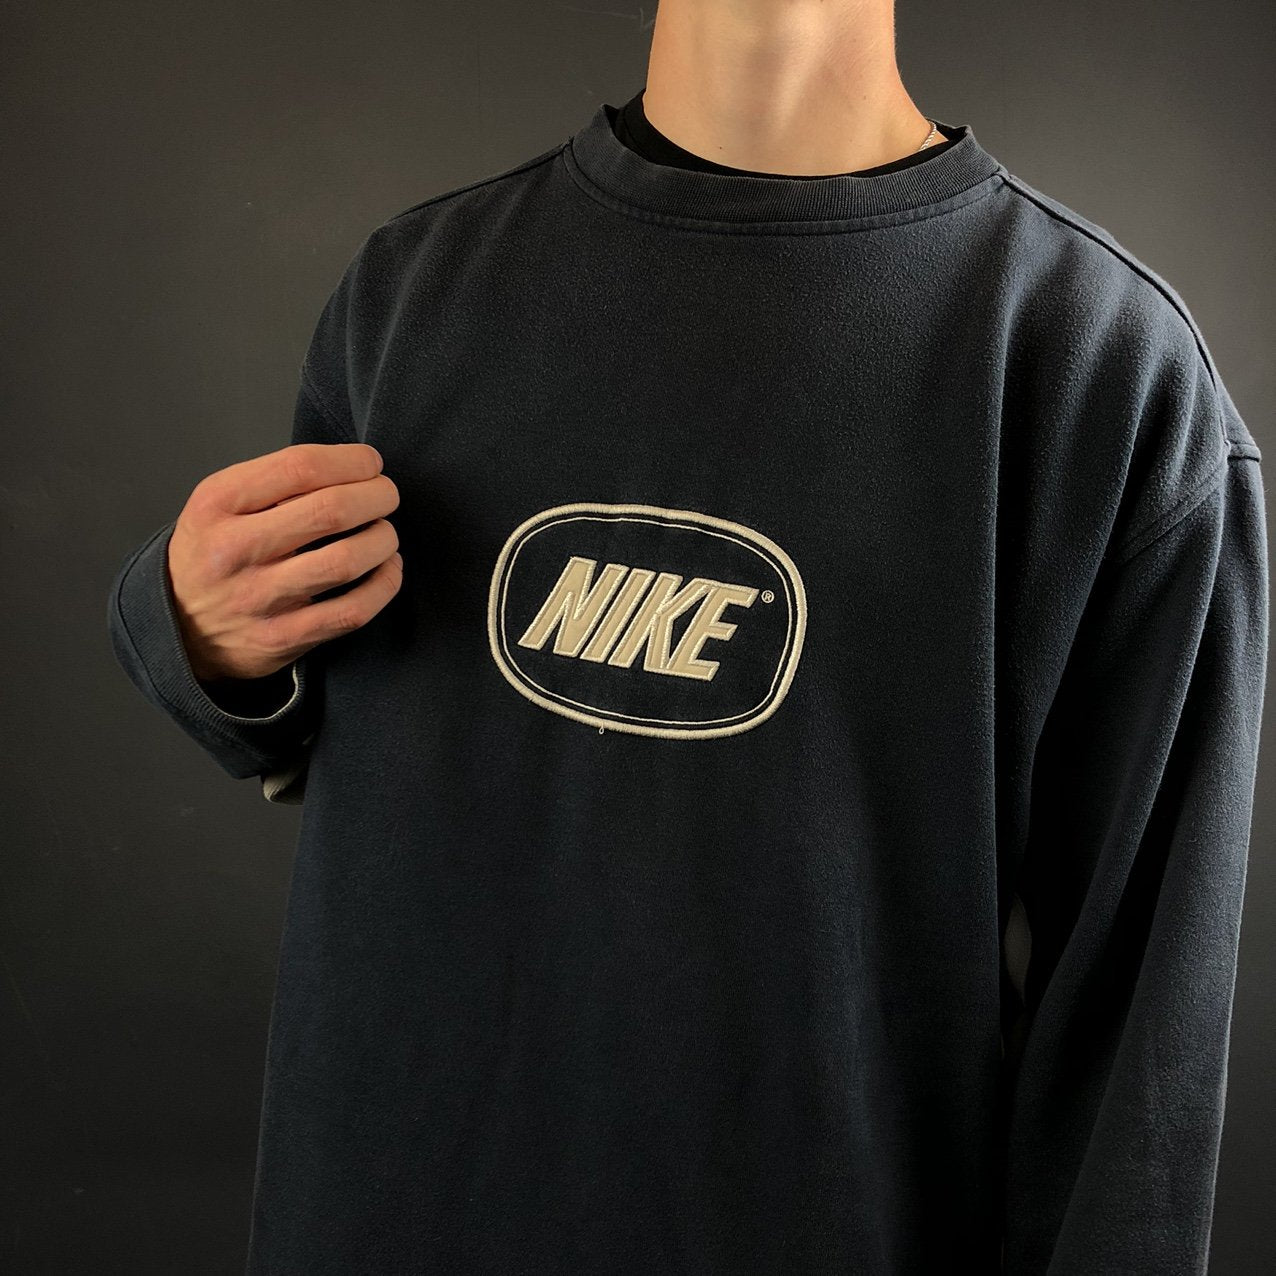 vintage spellout sweatshirt